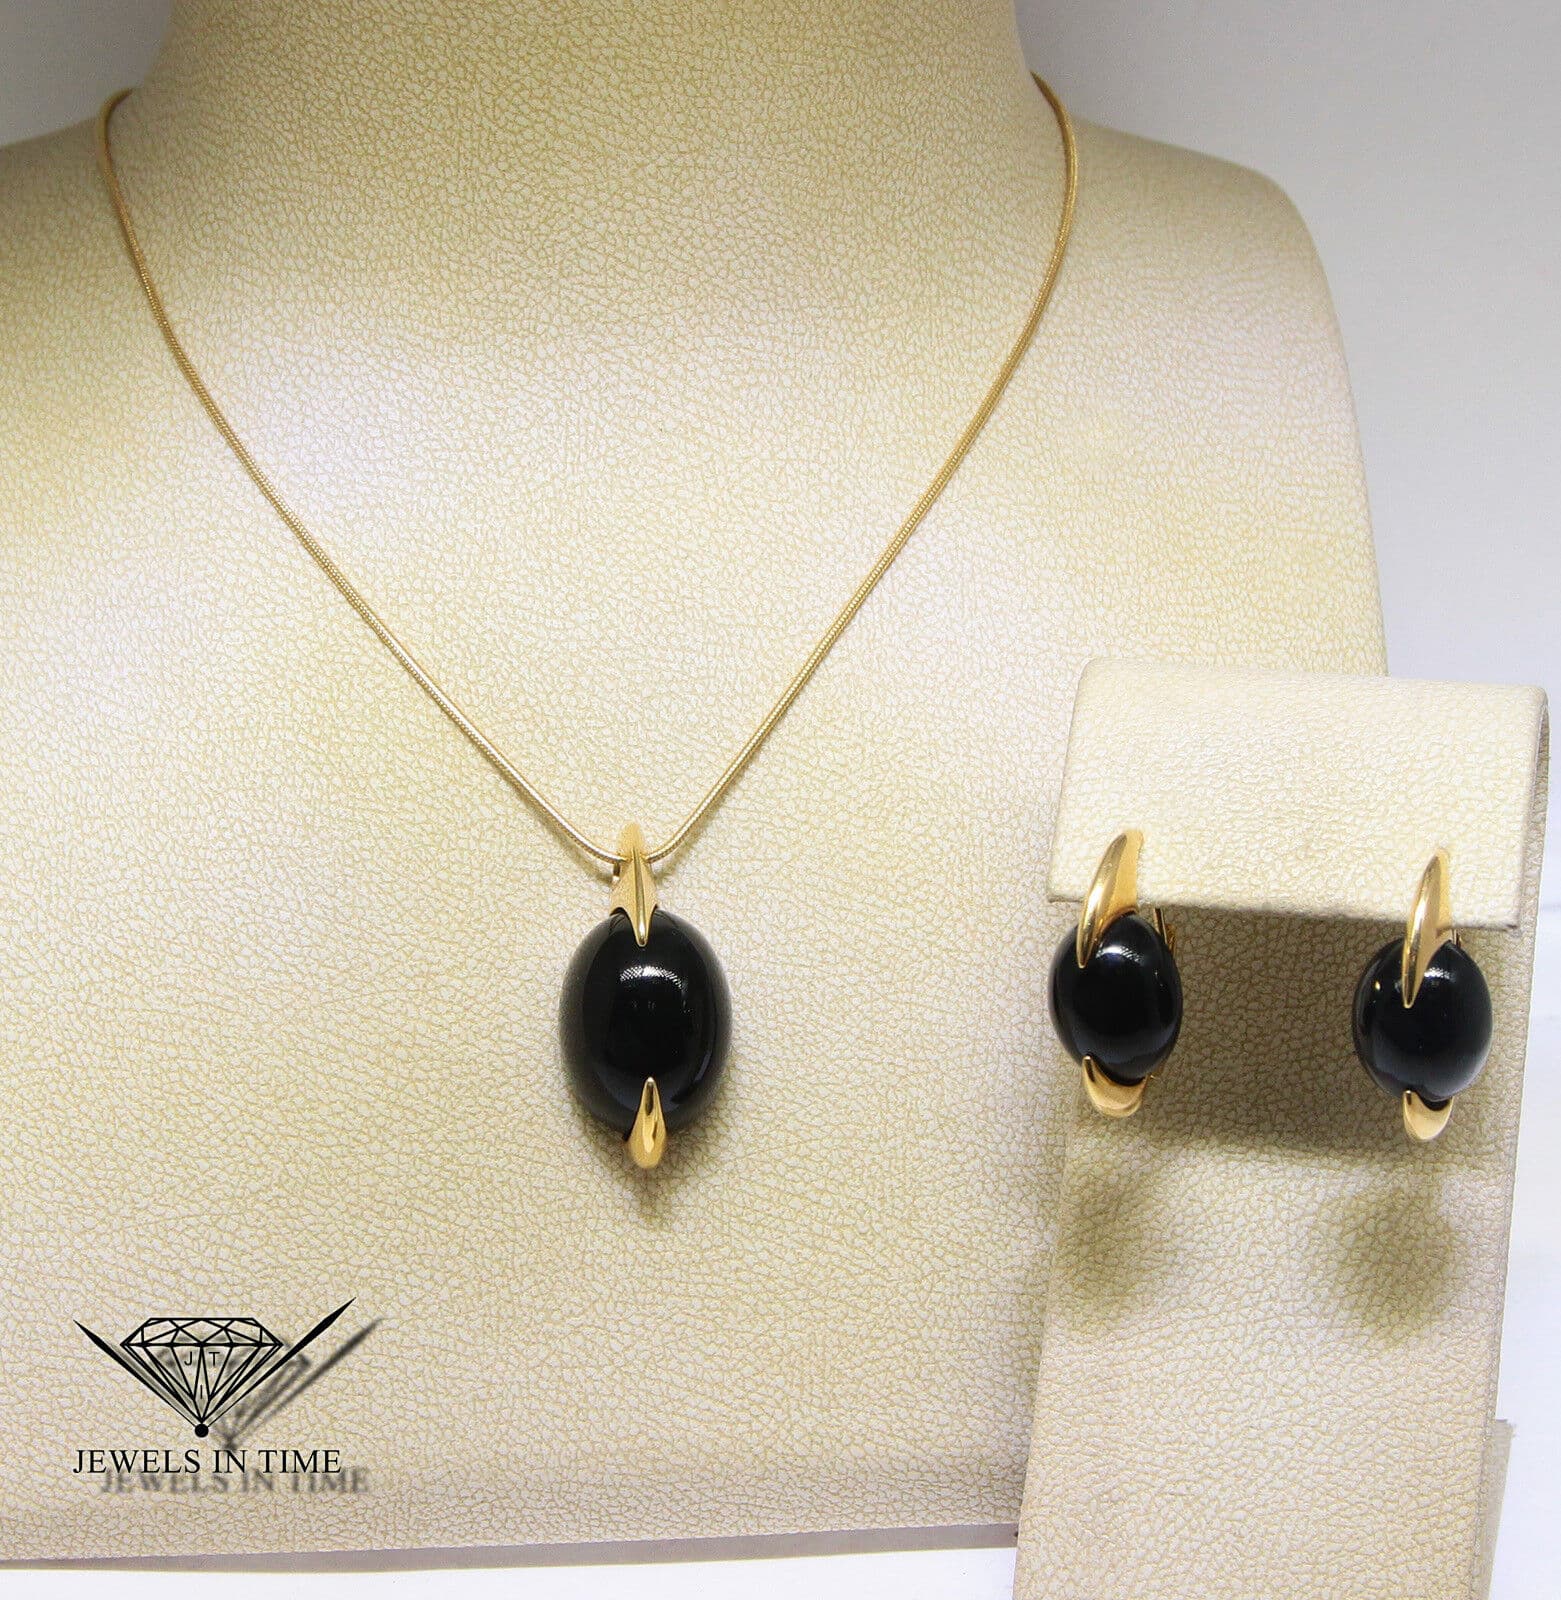 Tito Pedrini Black Onyx Gemstone in 18k Yellow Gold Necklace & Earrings Set